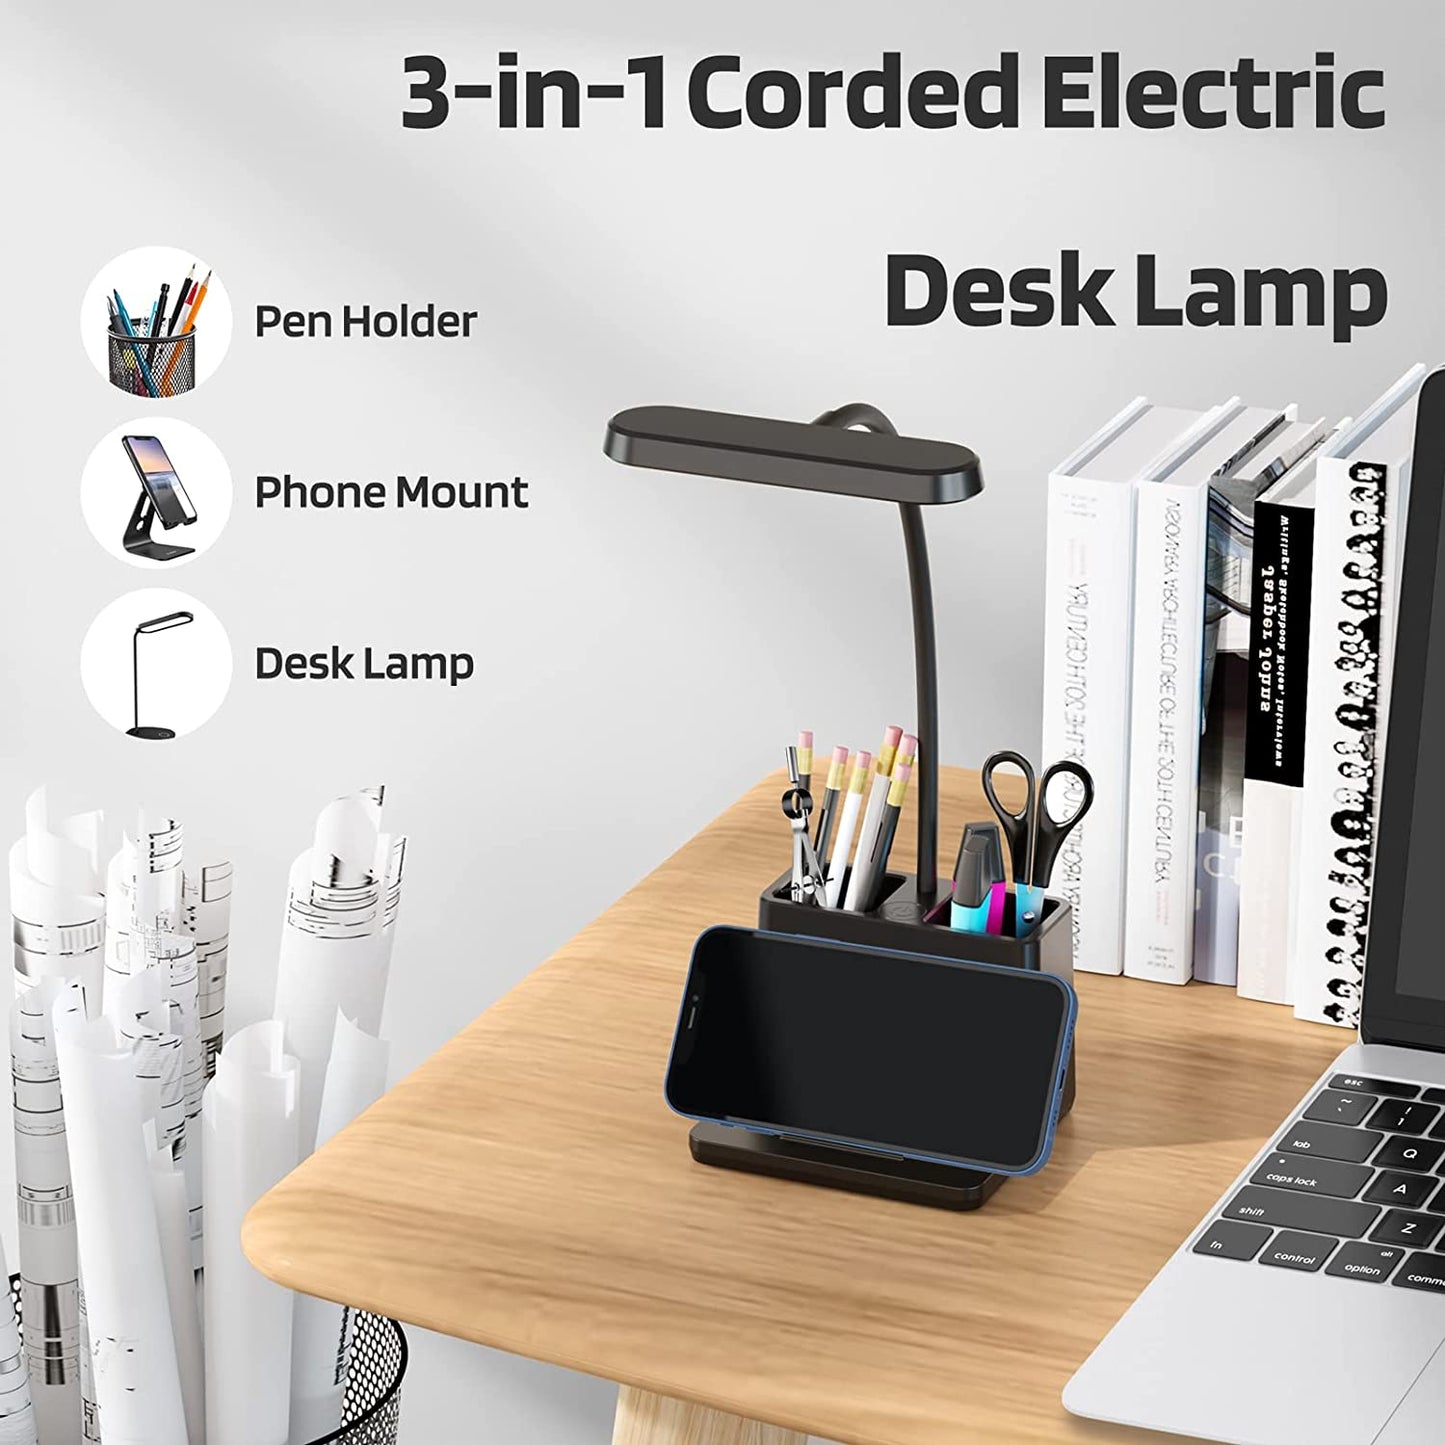 450LM Small Desk Lamp, LED Desktop Lamps for Home Office, Black Desk Light with Pen Holder, Photo Mount, Flexible Gooseneck, Kids Study Desk Lamp for College Dorm Room, Charger Adapter Included